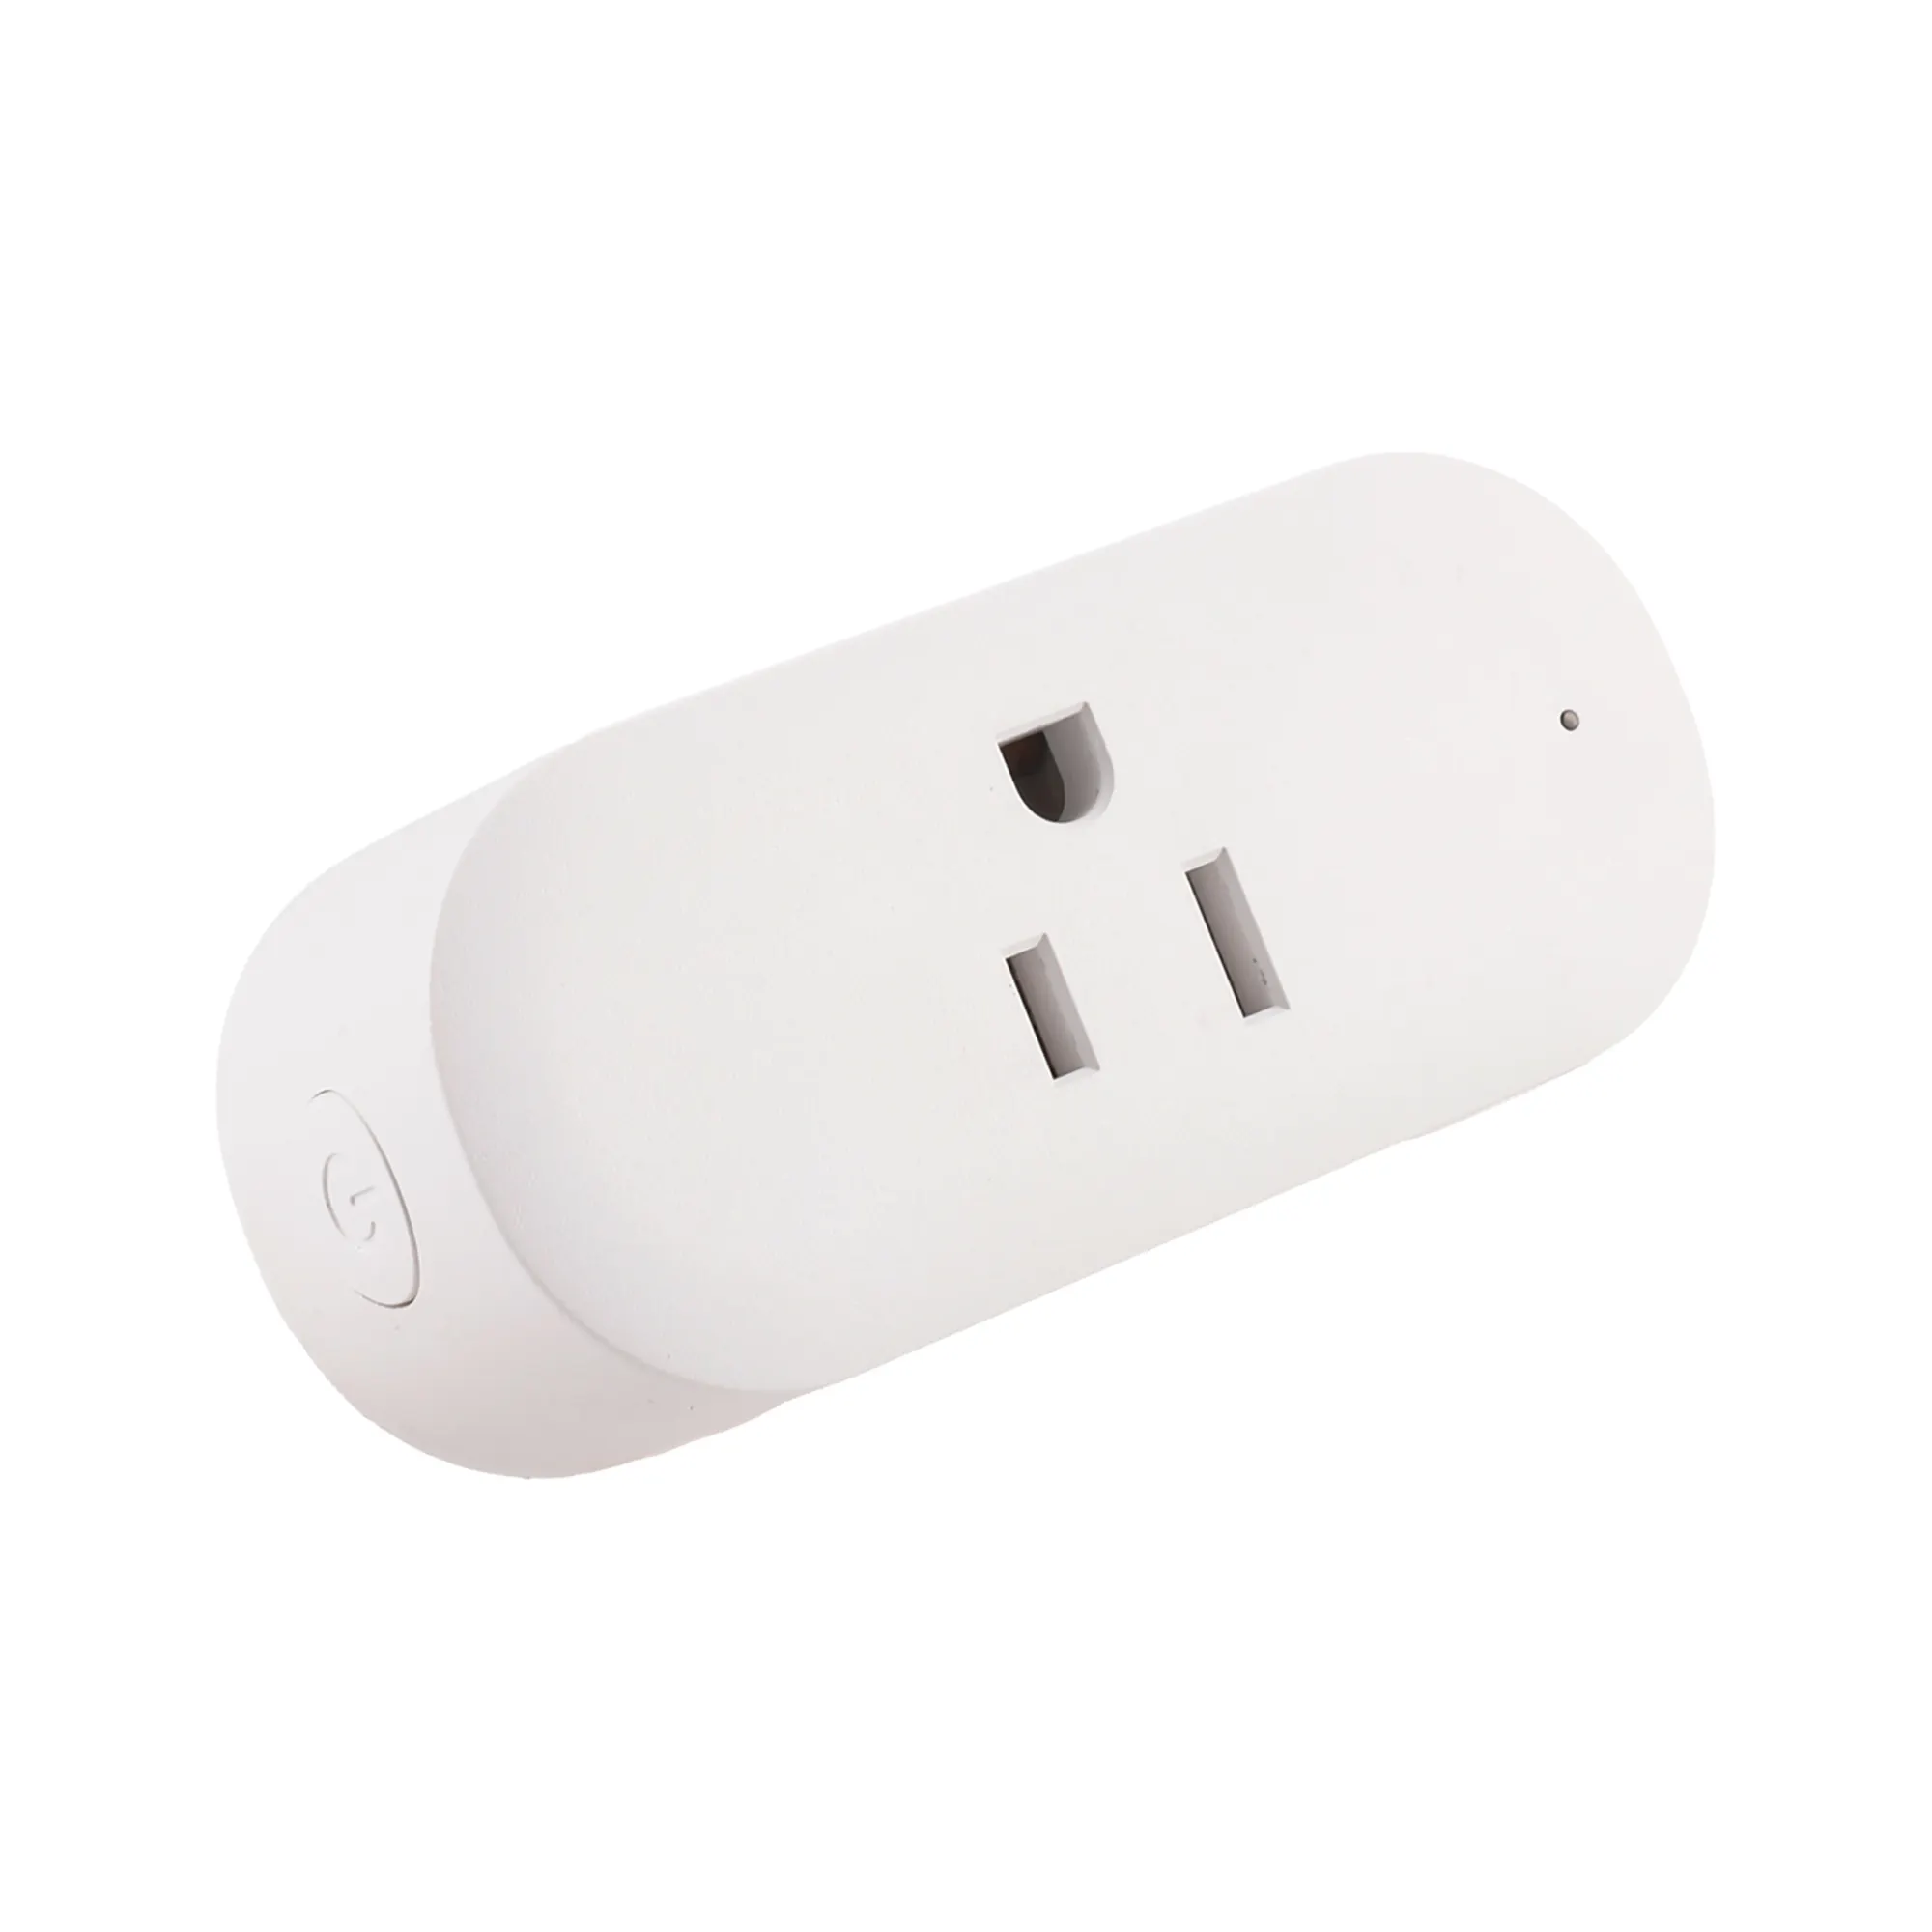 TECKIN USA Smart Plug Mini Outlet Work with Tuya Smart Life, WiFi Enabled Remote Control Smart Socket